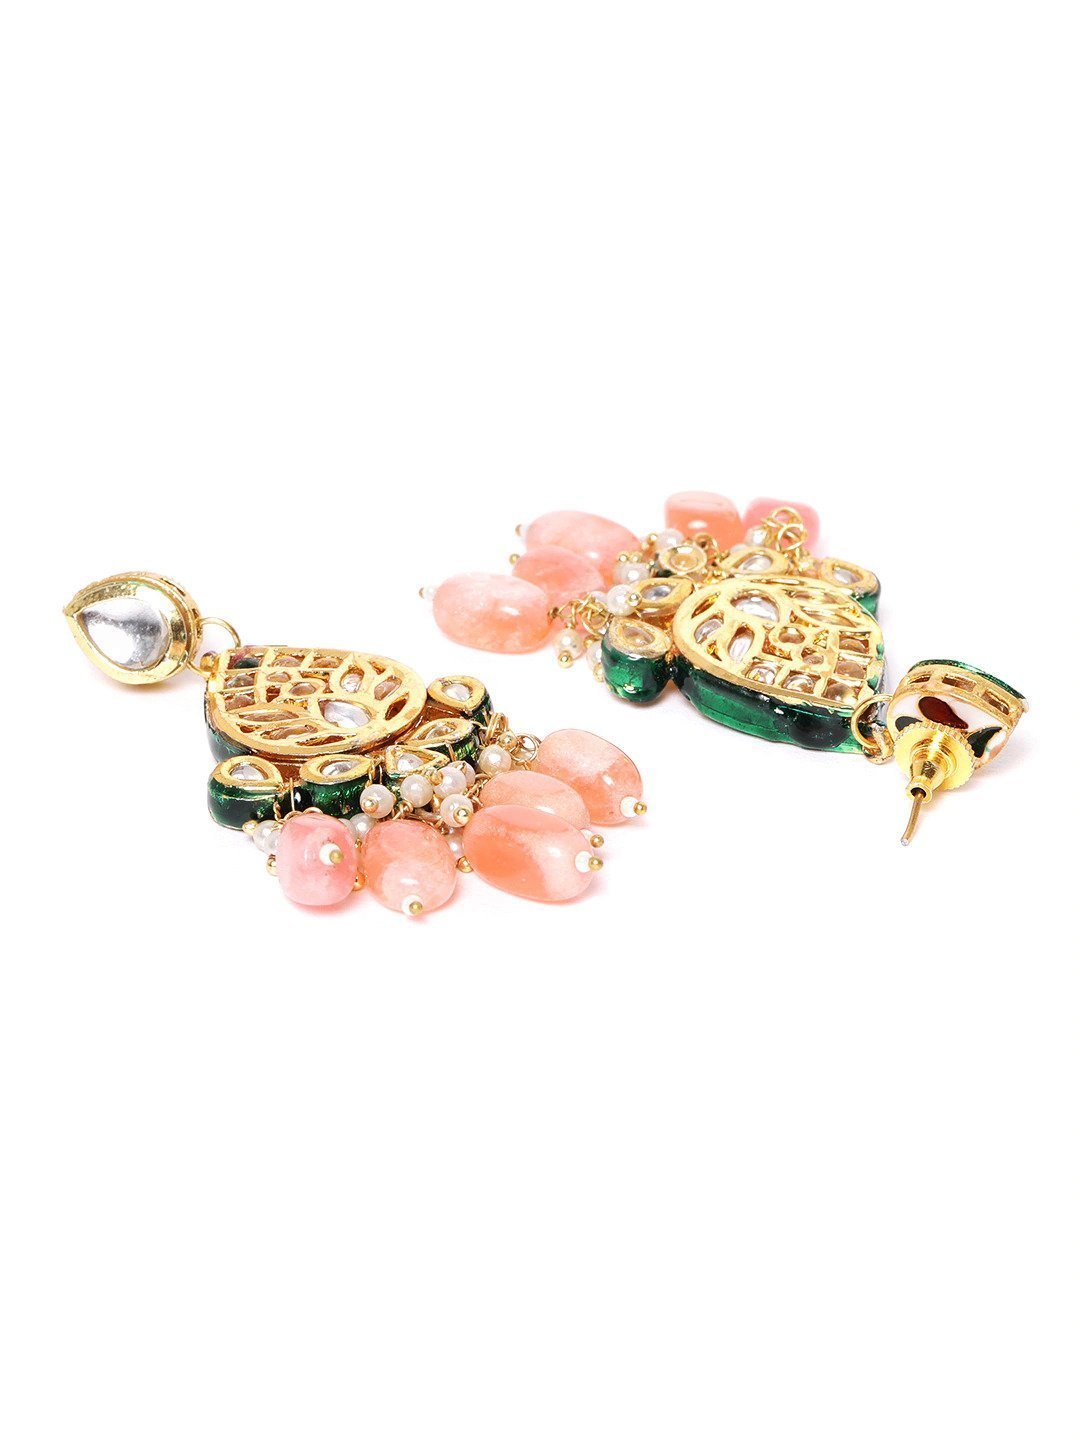 Women's Peach Beads Kundan Stones Ranihar Jewellery Set - Priyaasi